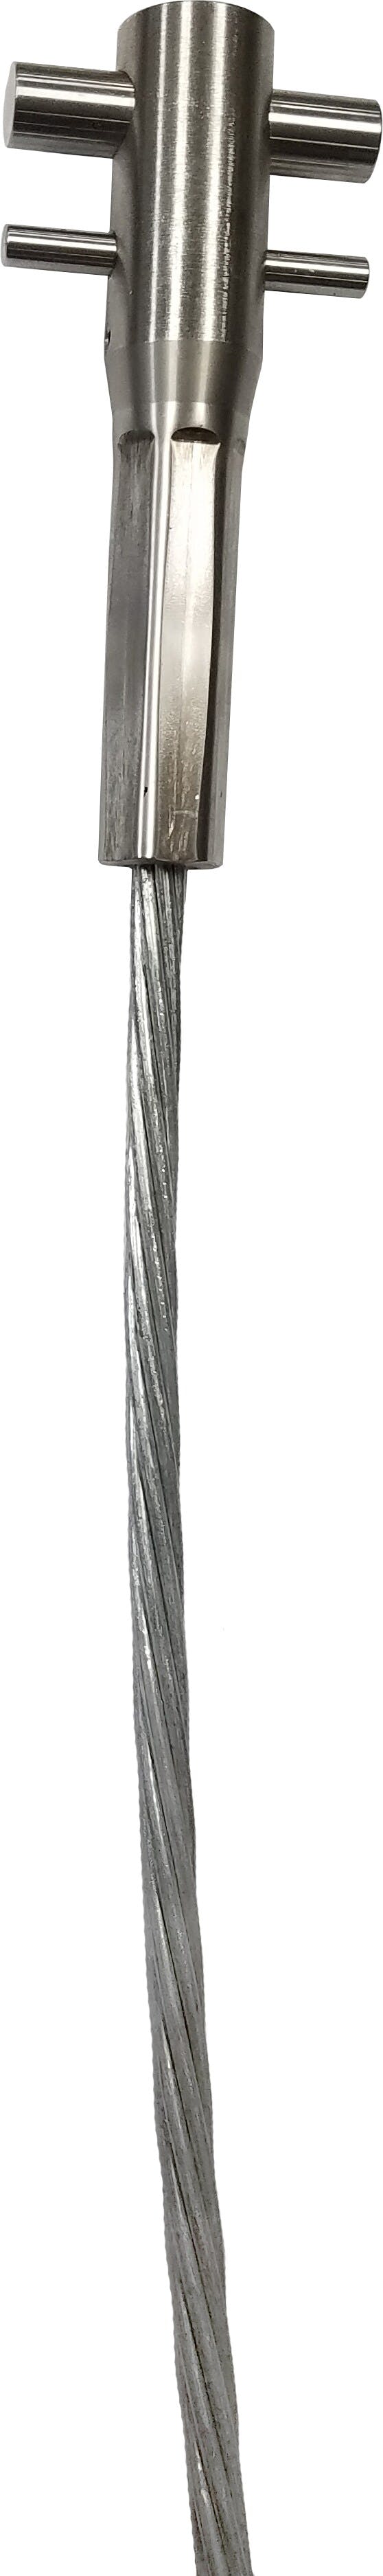 3M™ DBI-SALA® Lad-Saf™ Swaged Cable 6115005, 3/8 Inch, Galvanized Steel, 15 m